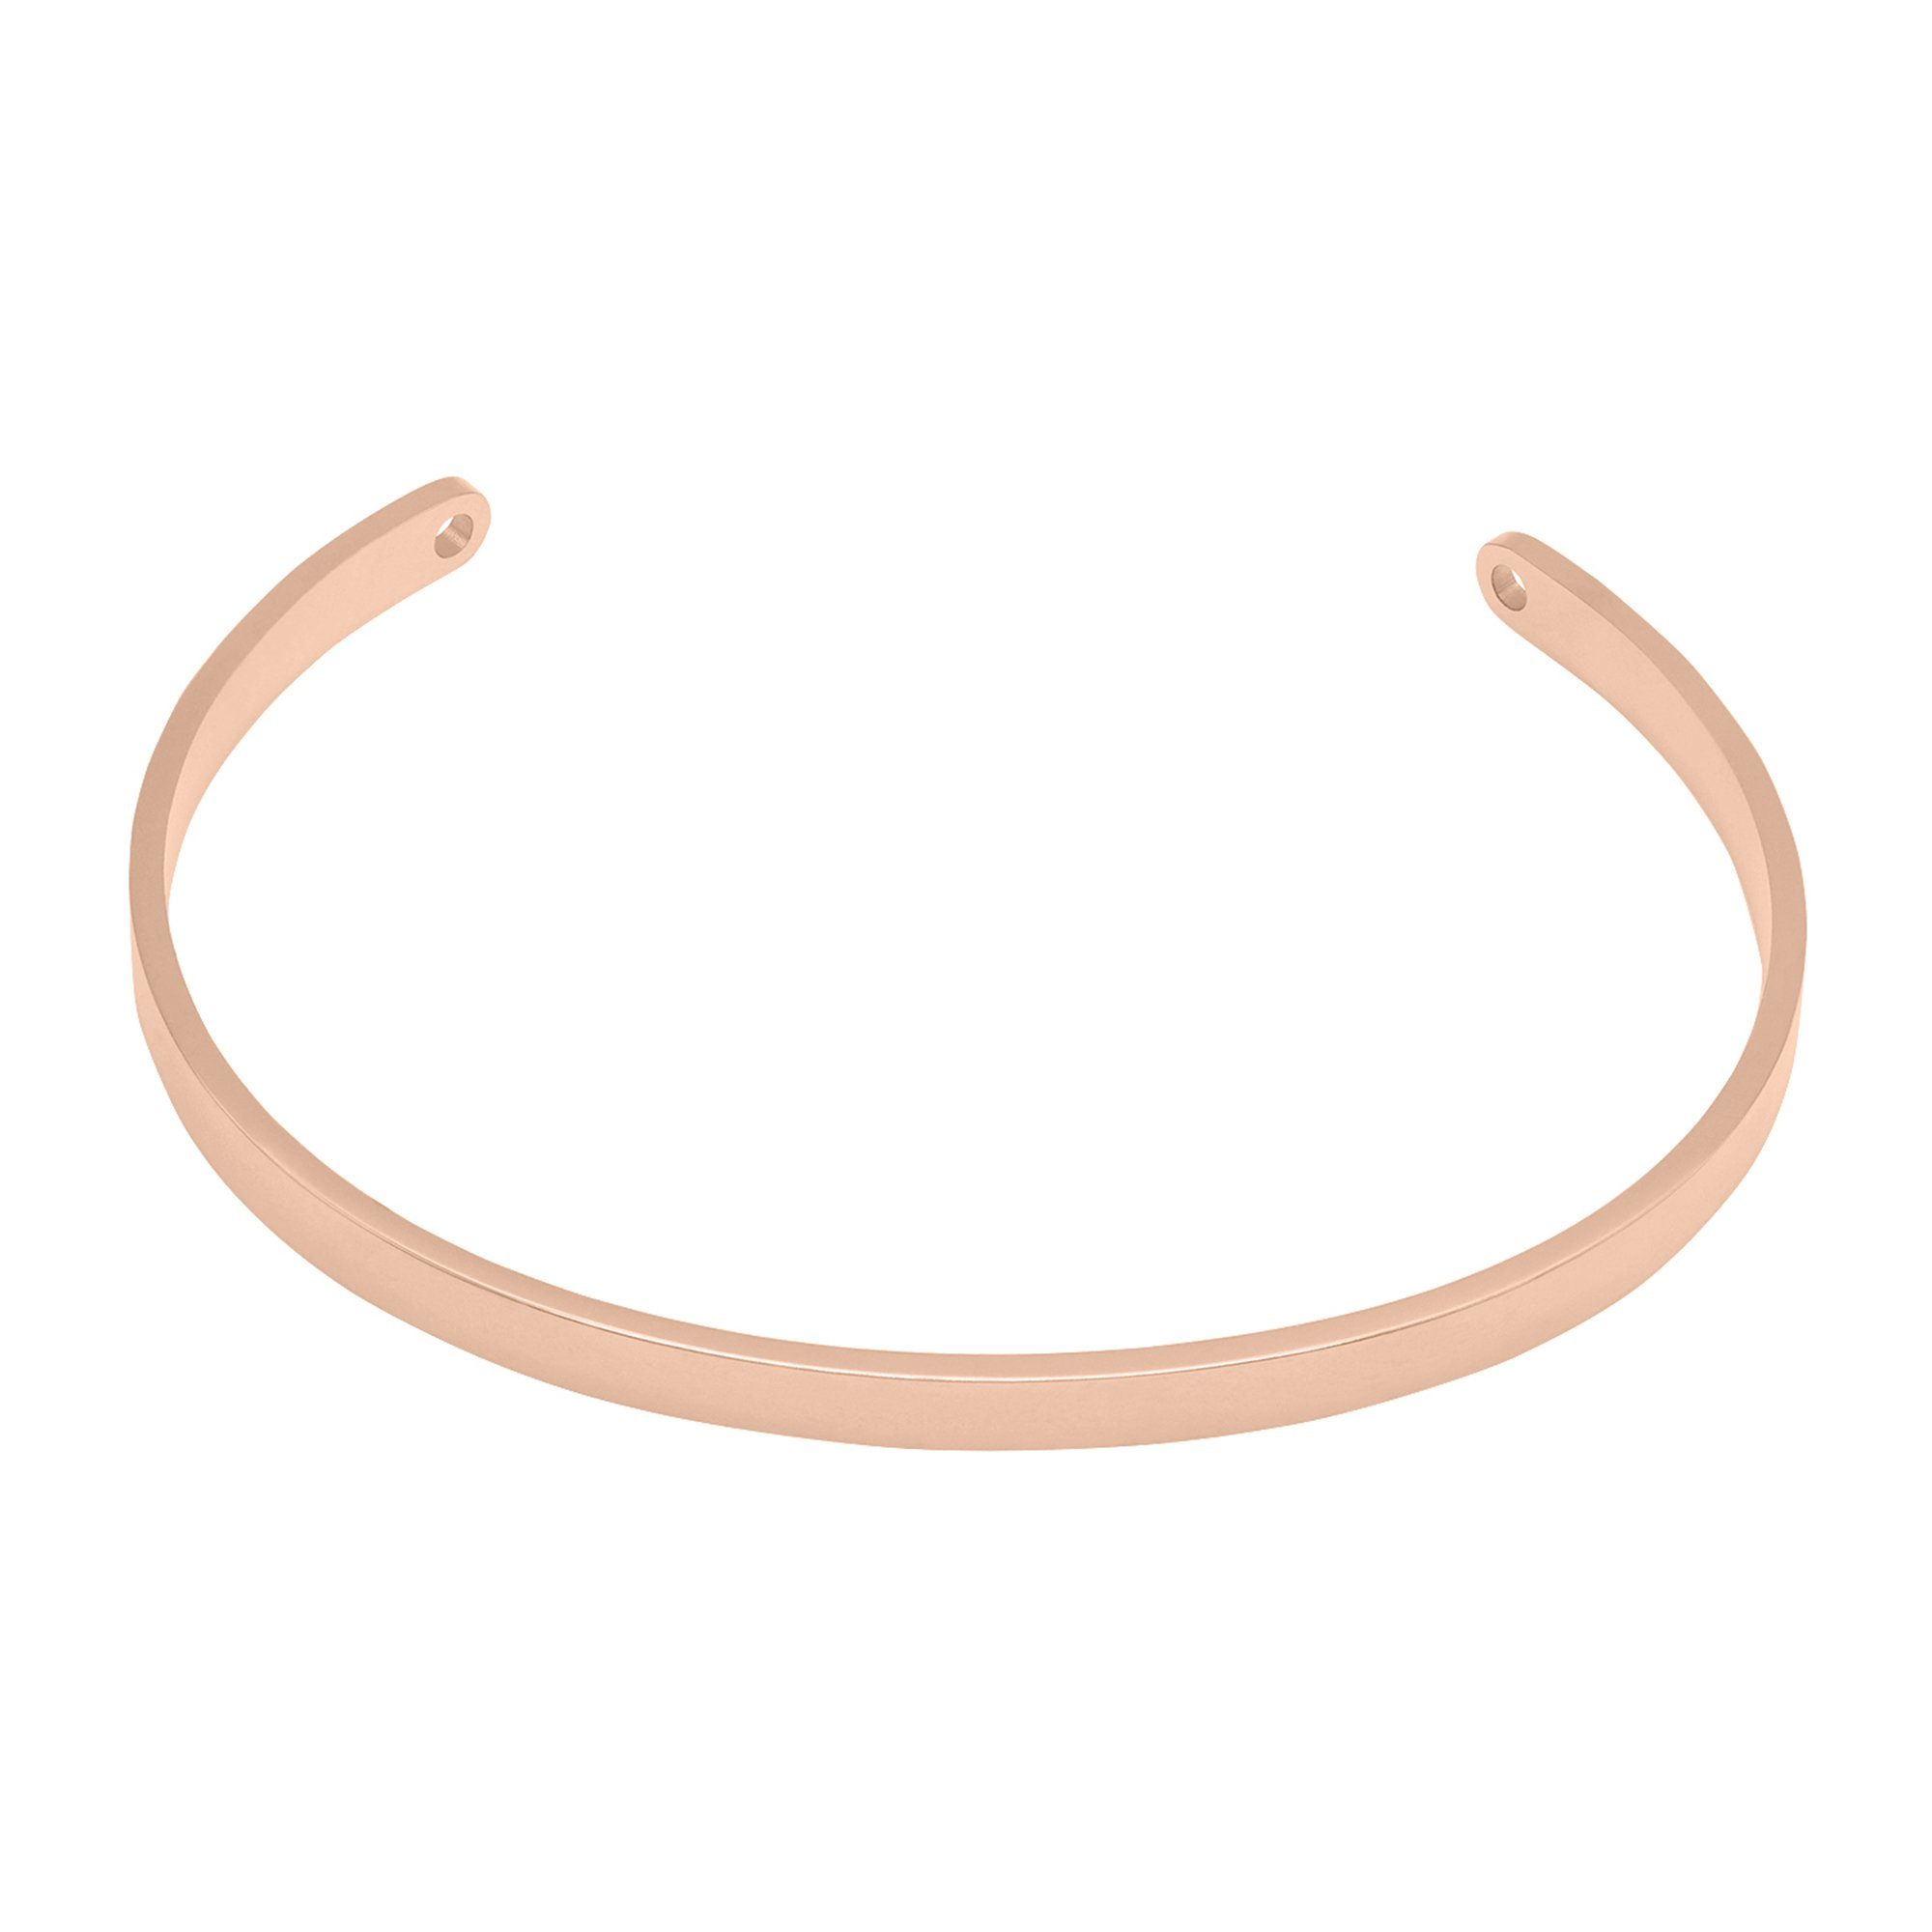 Heideman Armband Brave rose goldfarben (Armband, inkl. Geschenkverpackung), Armreif für Damen | Edelstahlarmbänder